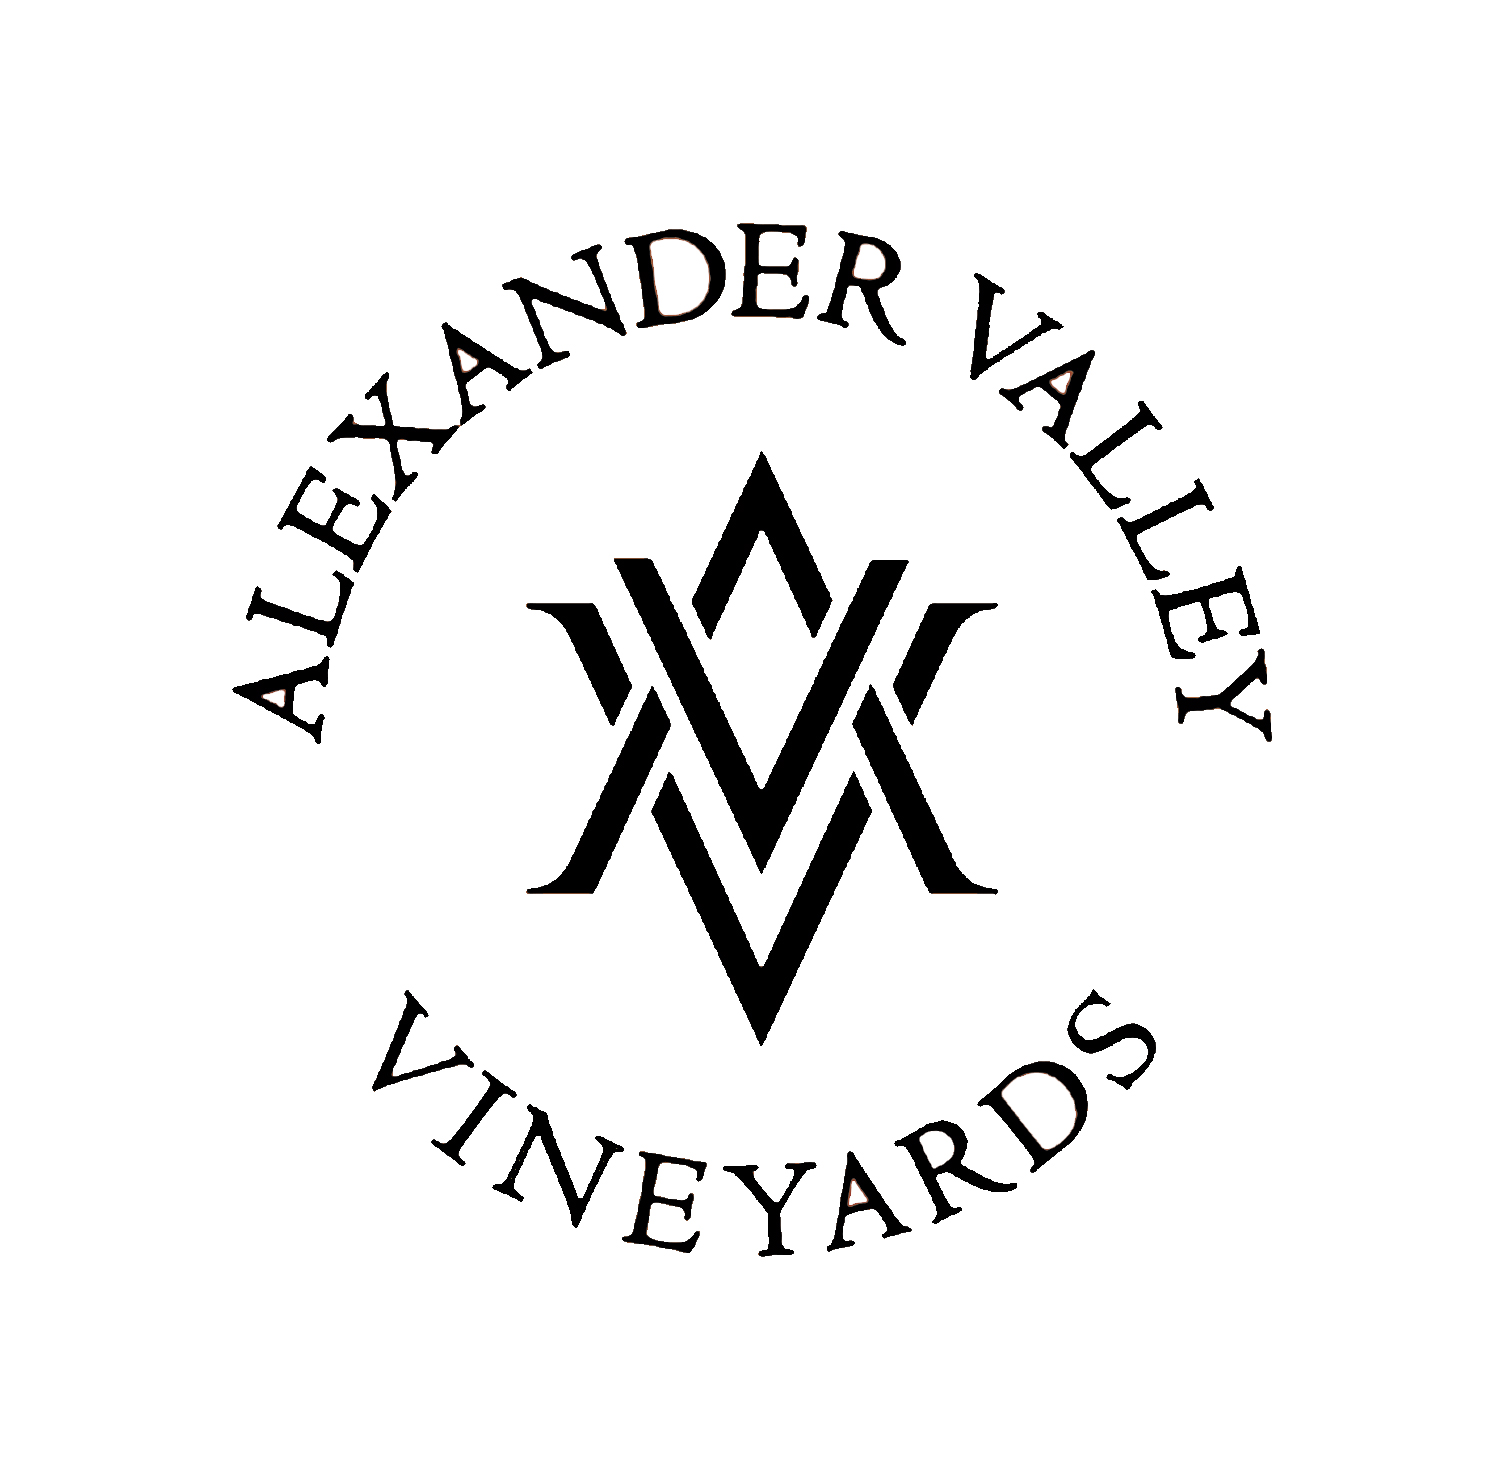 Alexander Valley Vineyards